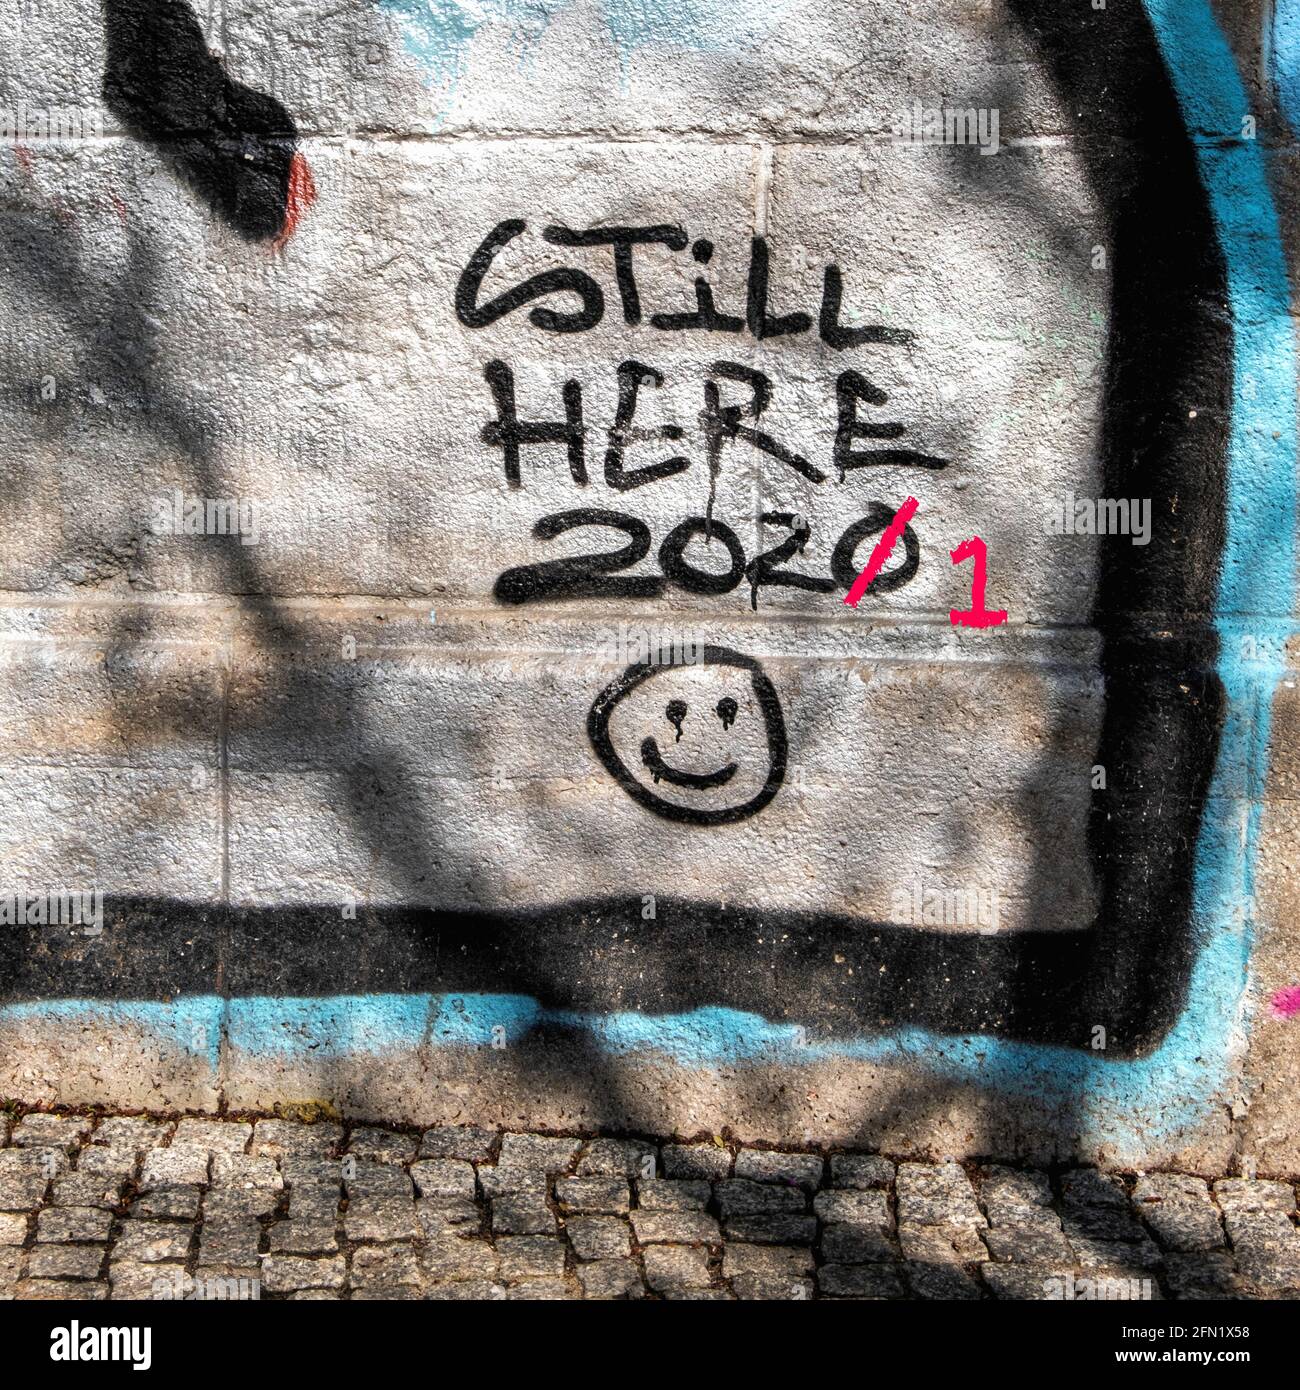 Still Here 2021 Graffiti and smiley face emoji under the Bornholmer strasse road bridge, Prenzlauer Berg Berlin Stock Photo